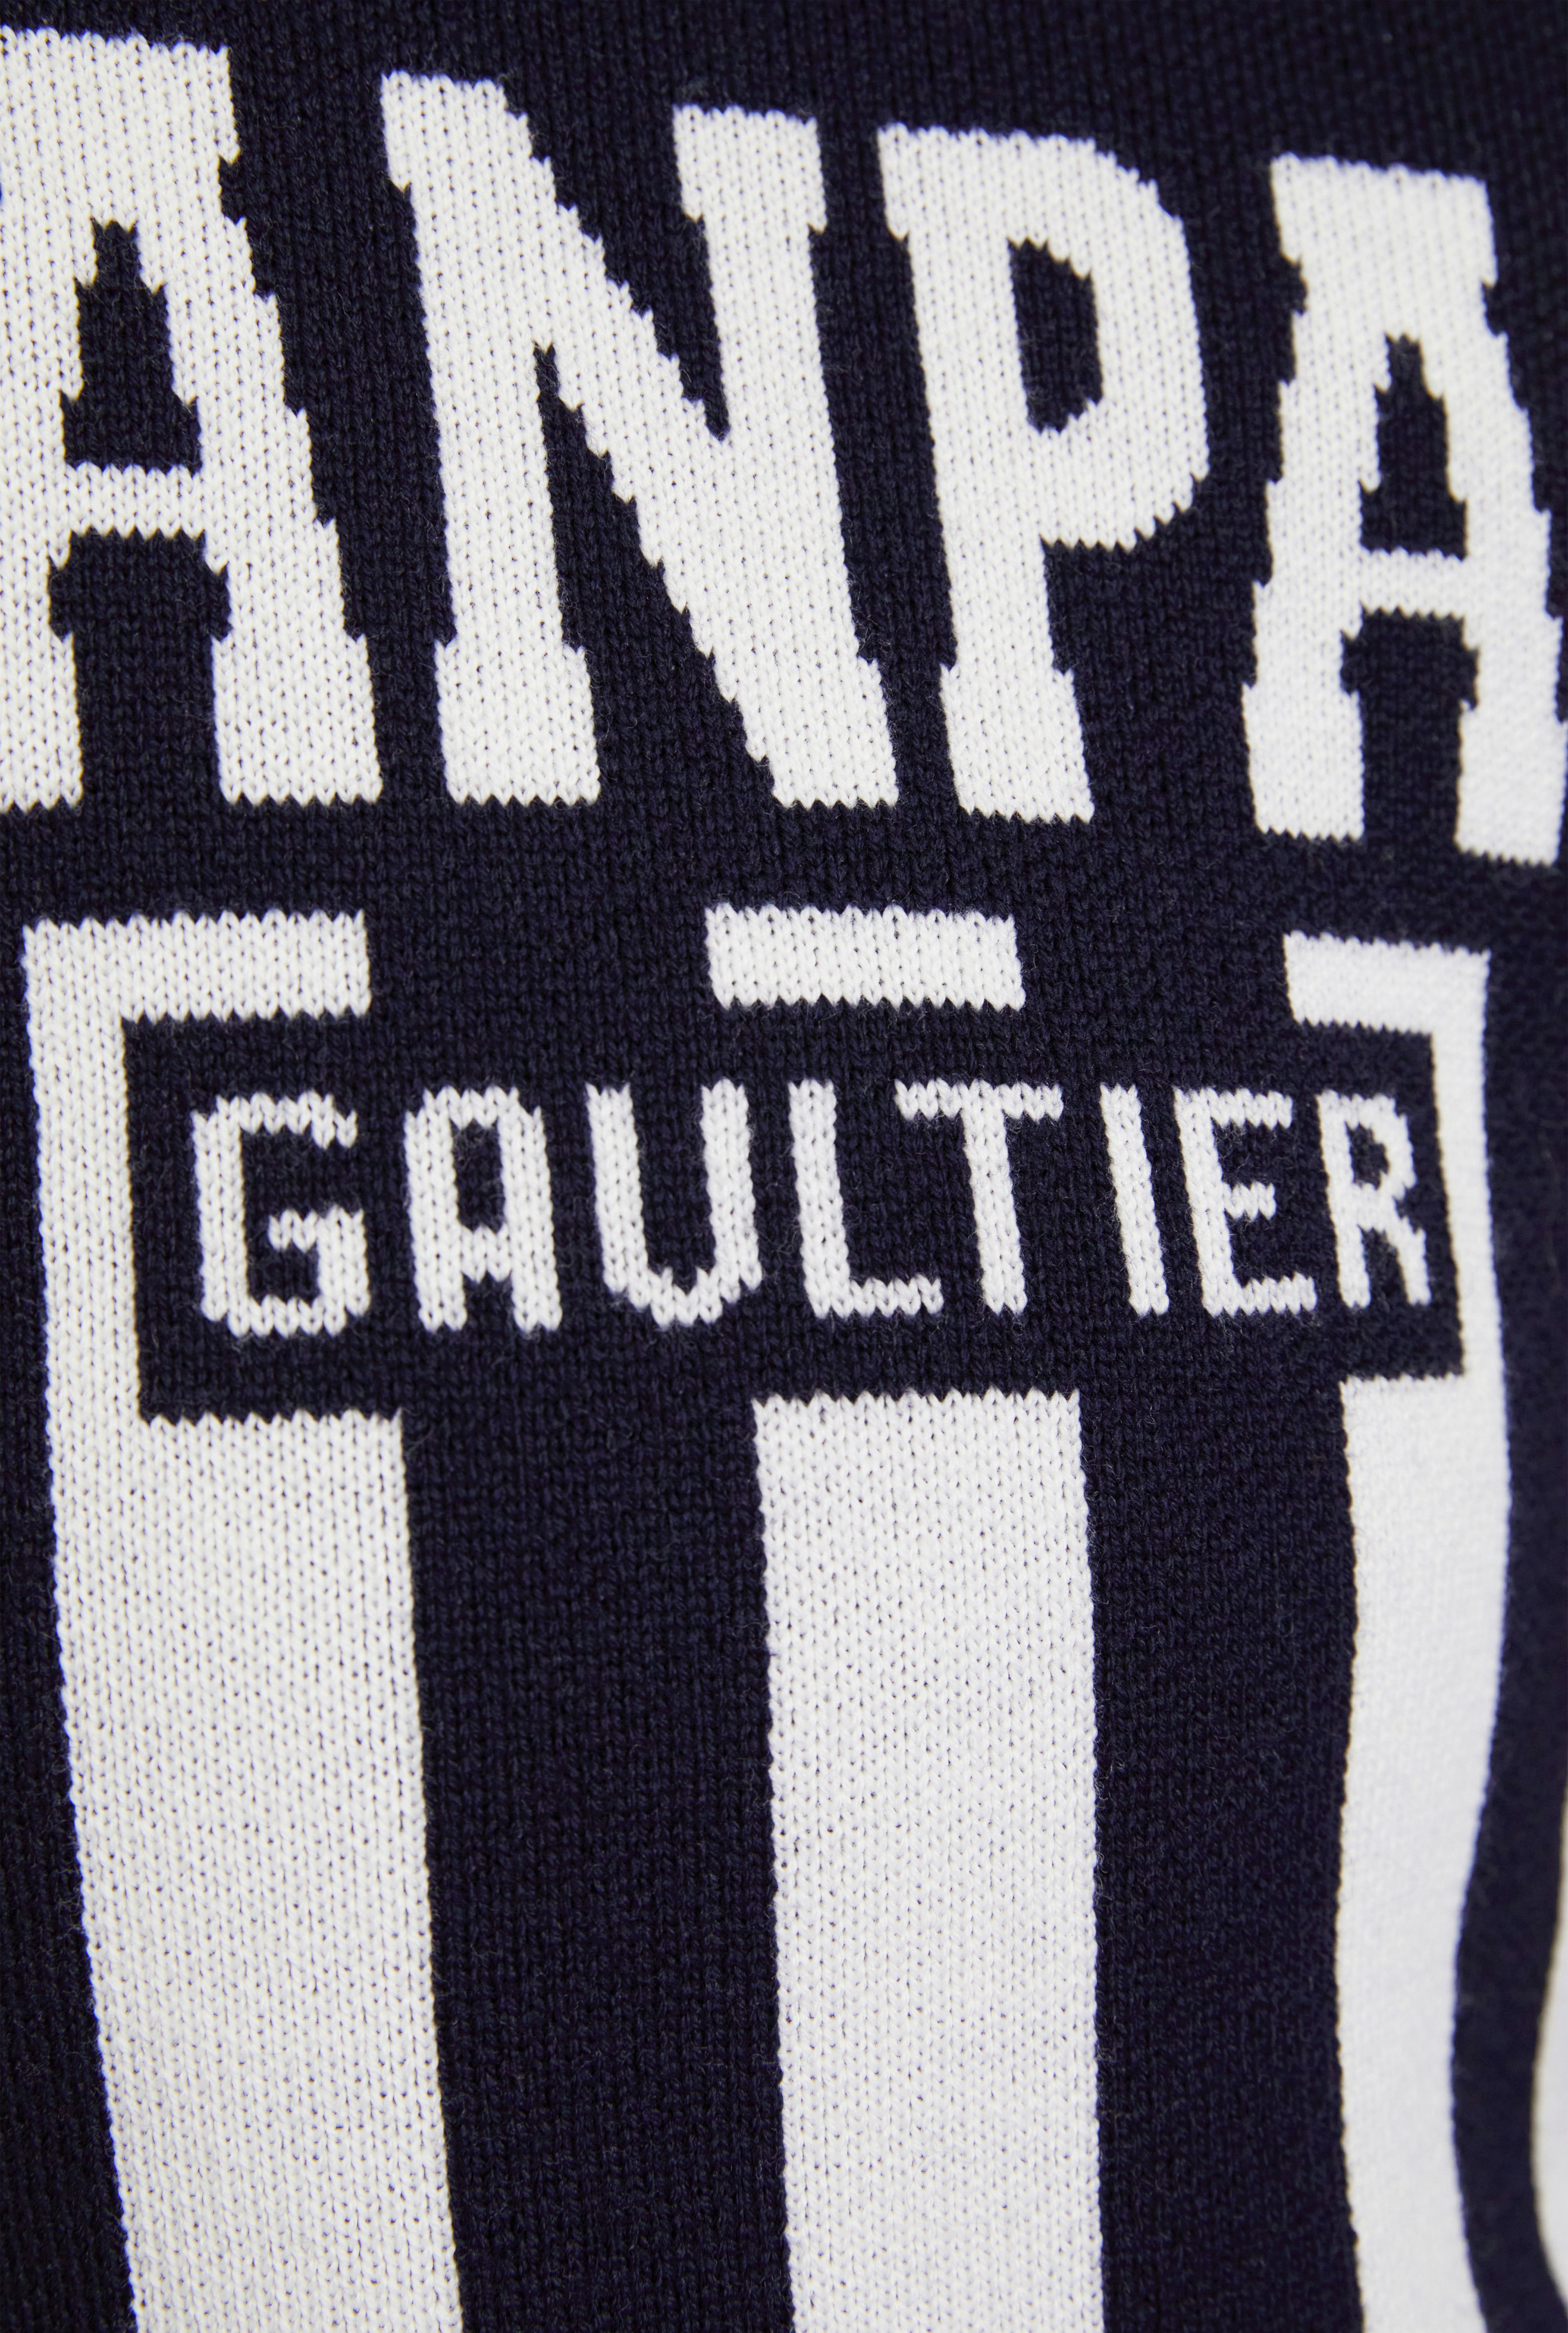 The Jean Paul Gaultier sweater